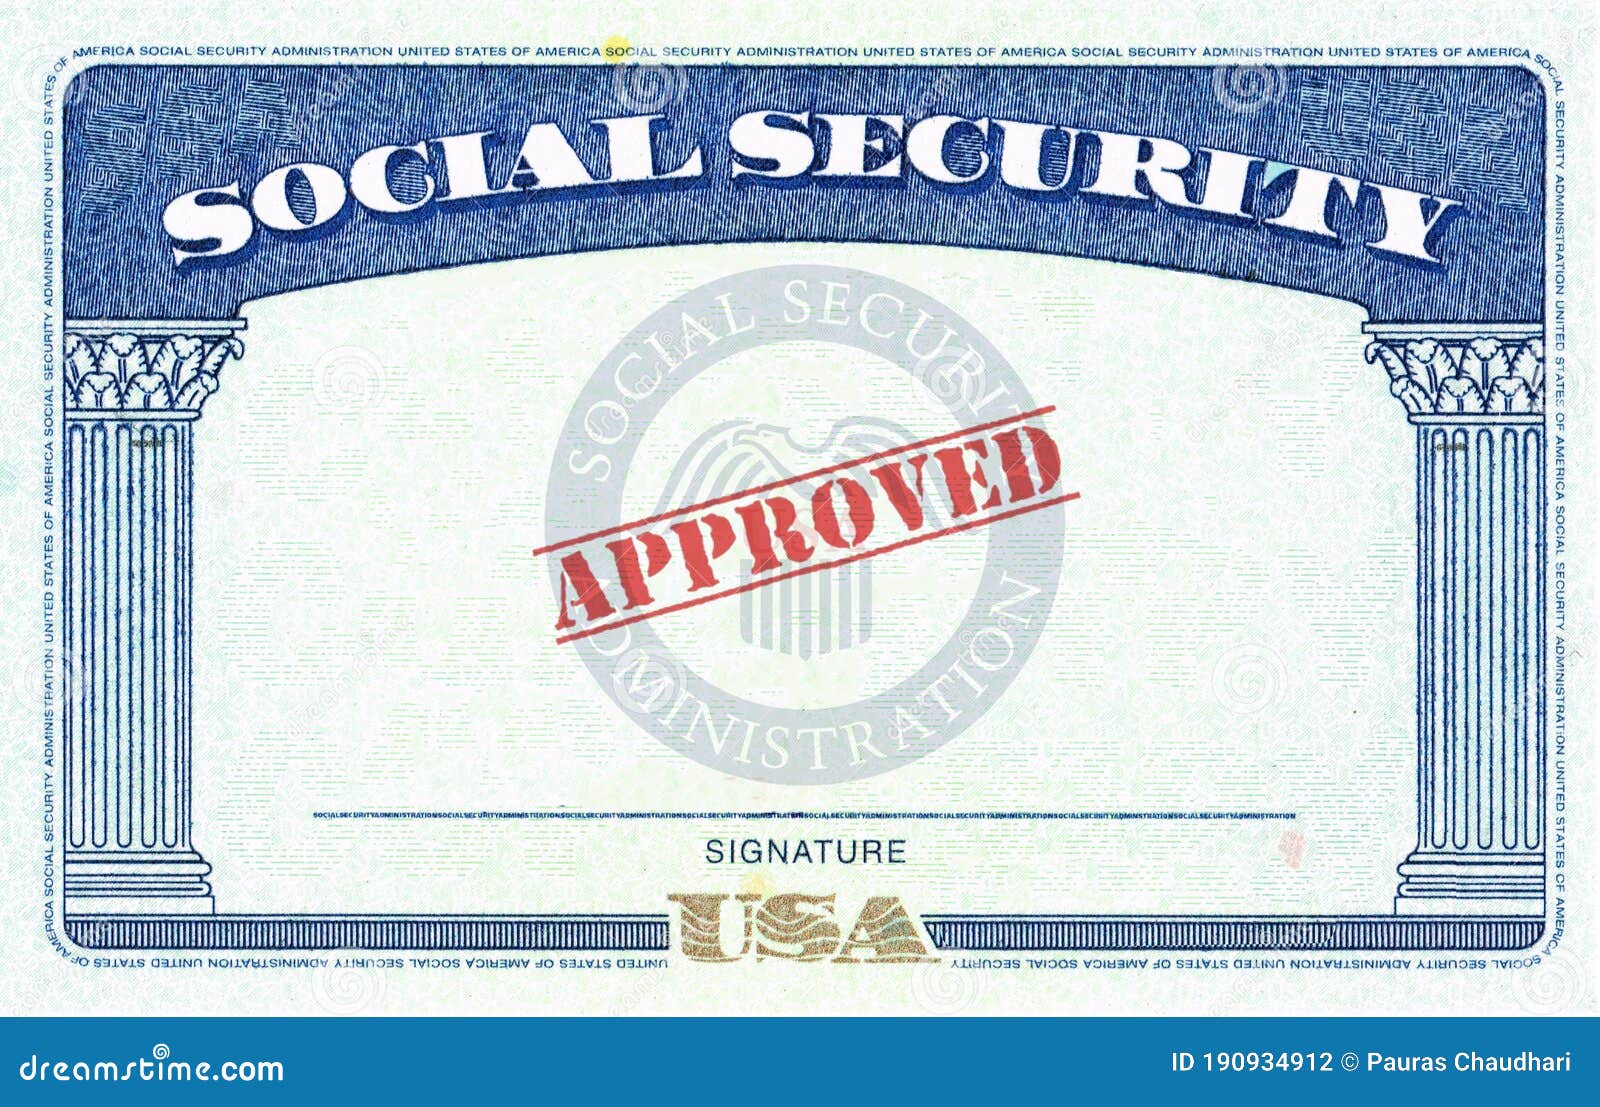 Social Security Card Template Photos - Free & Royalty-Free Stock Regarding Fake Social Security Card Template Download